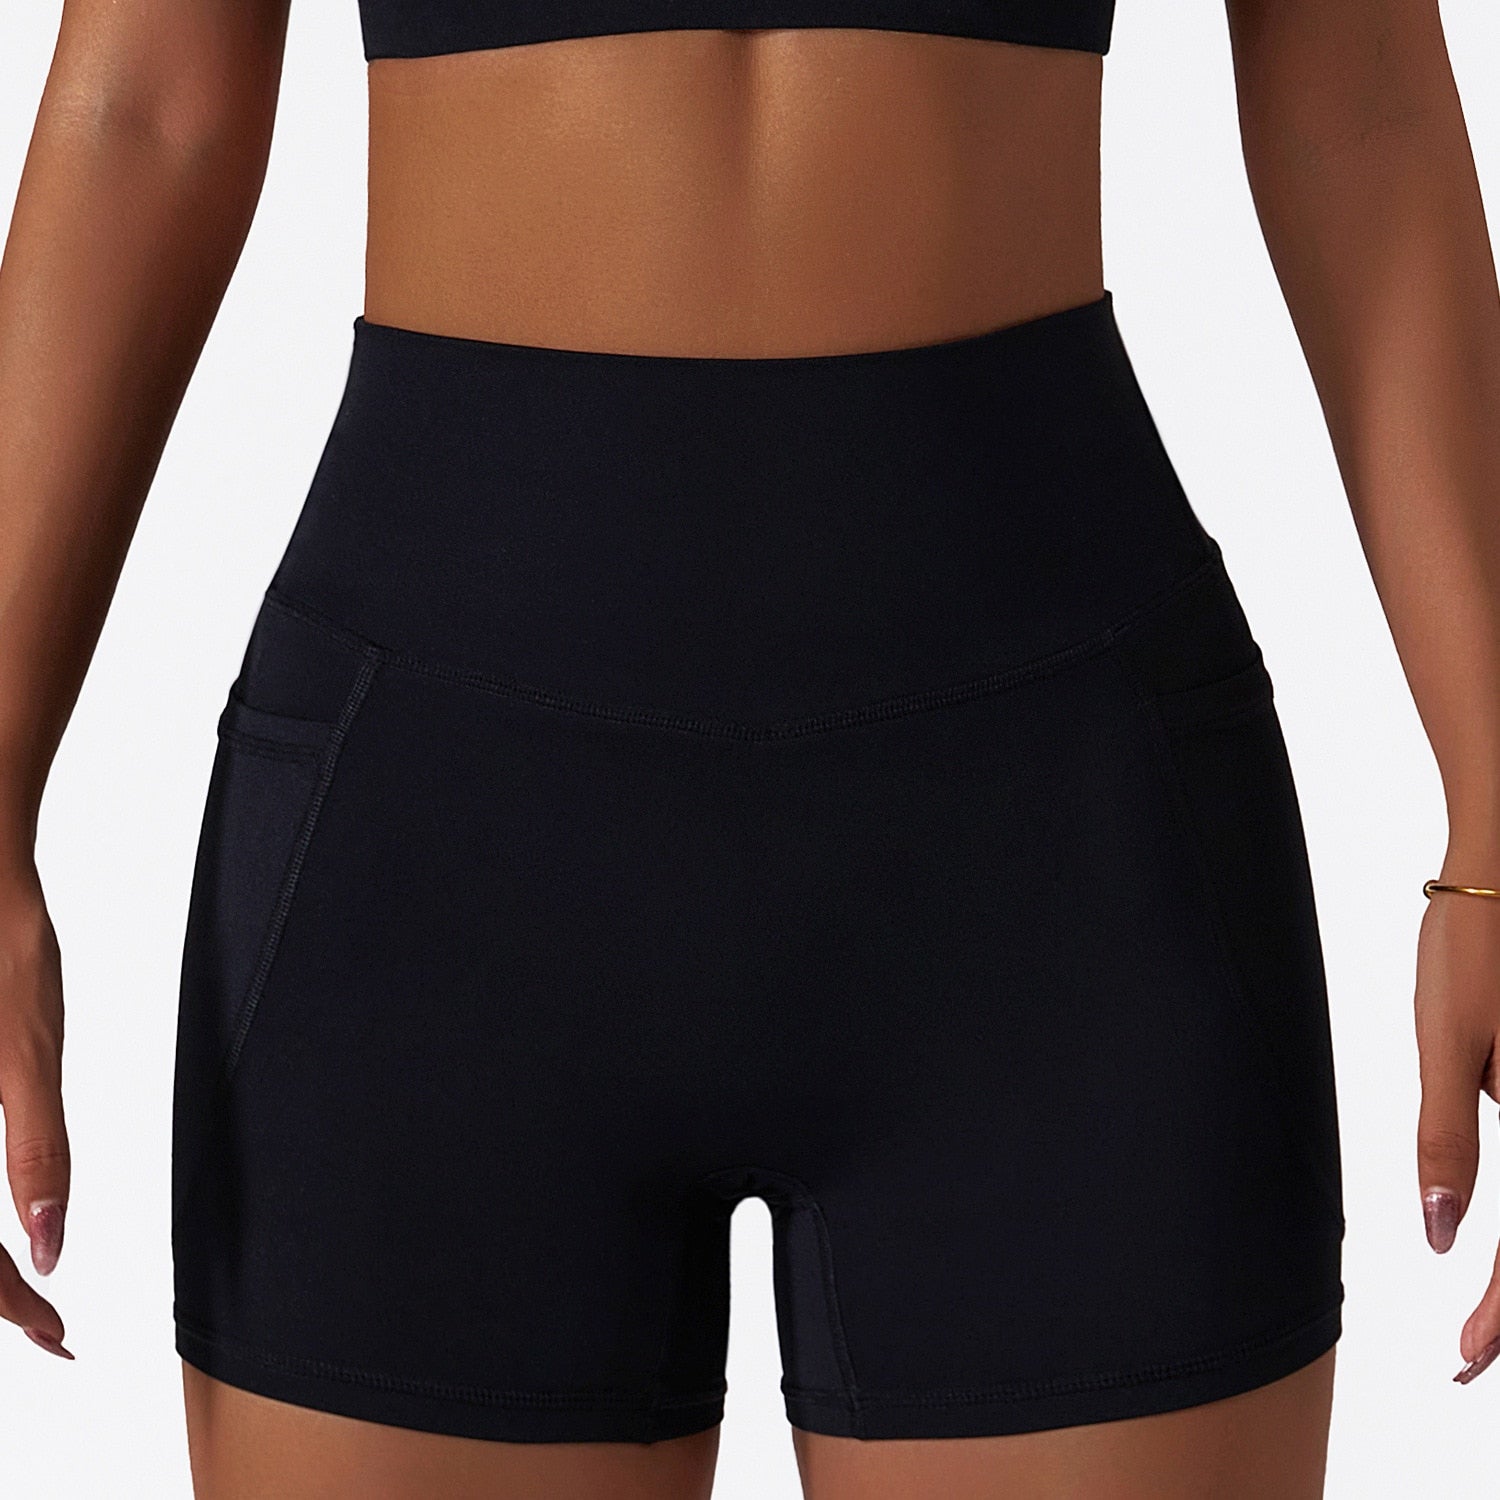 Comprar black Comfortable Skin Friendly High Waist Yoga Shorts